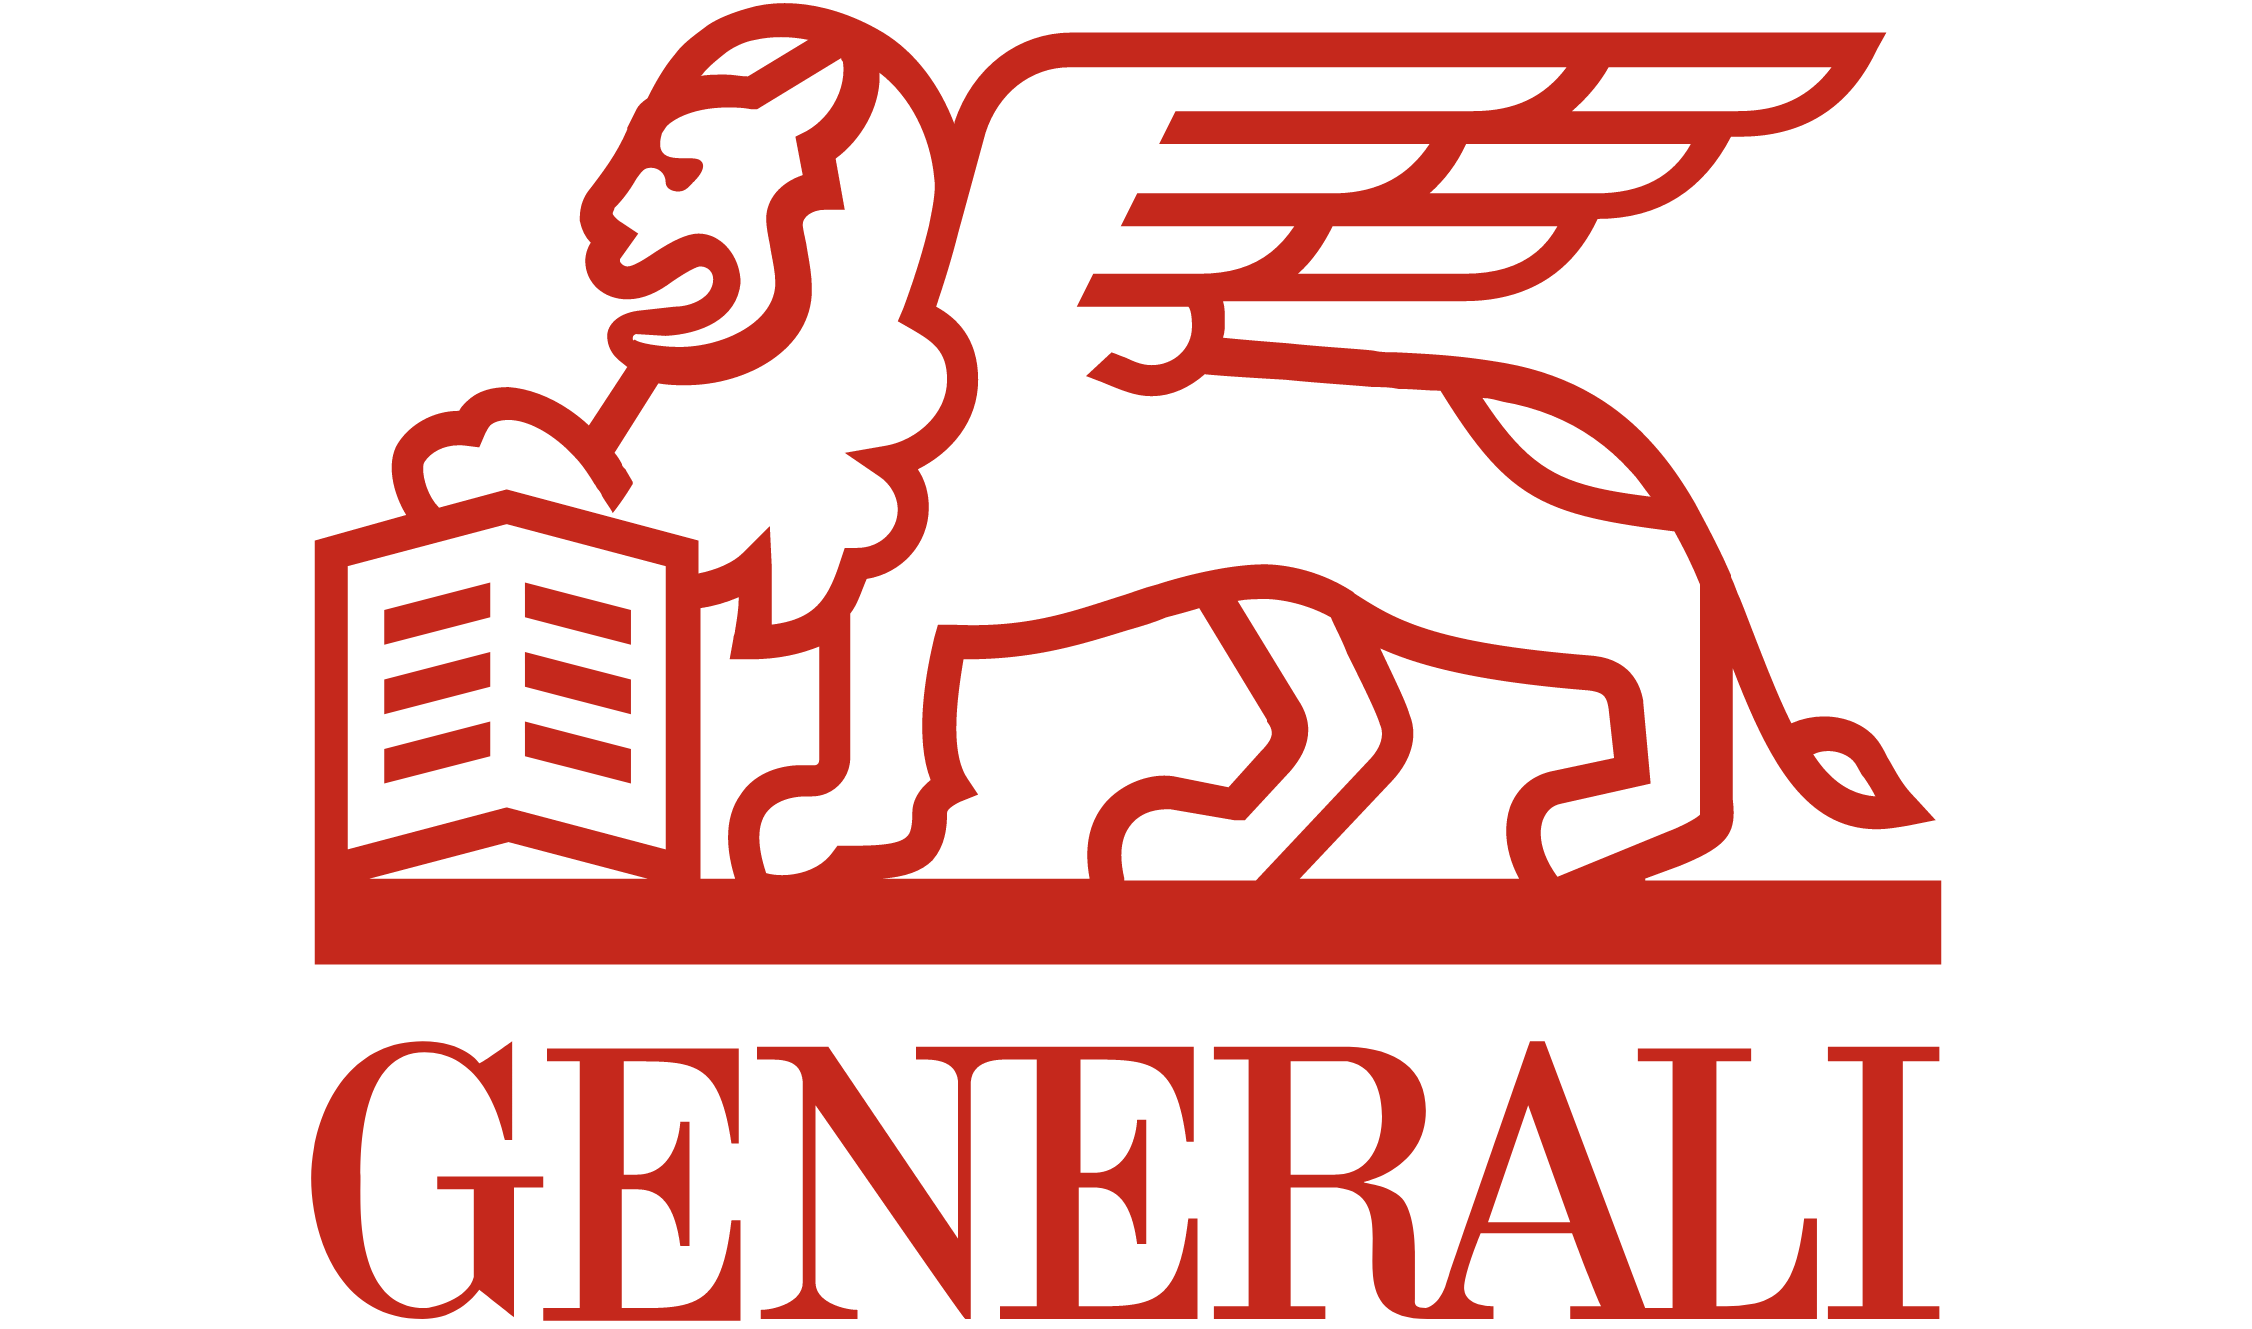 Generali Deutschland Holding AG Logo